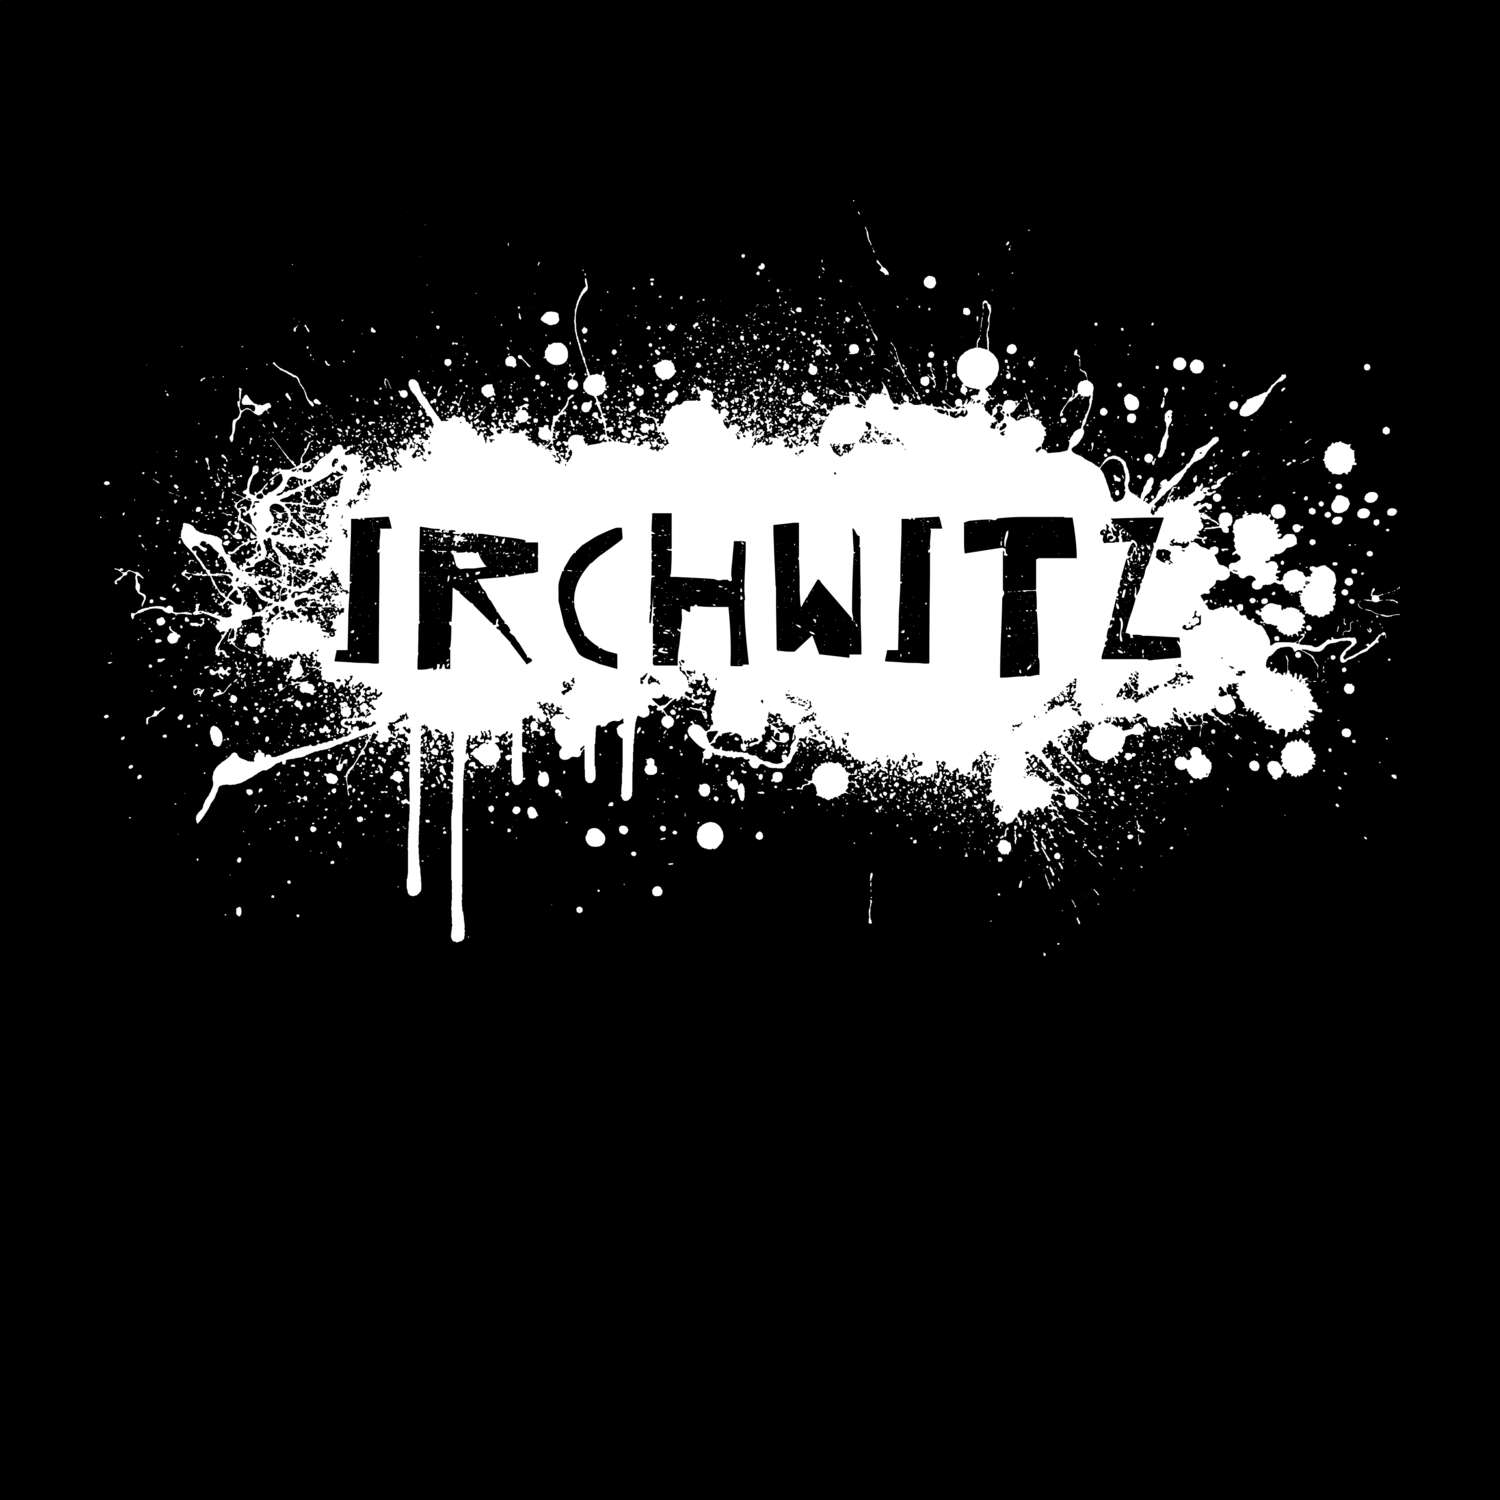 Irchwitz T-Shirt »Paint Splash Punk«